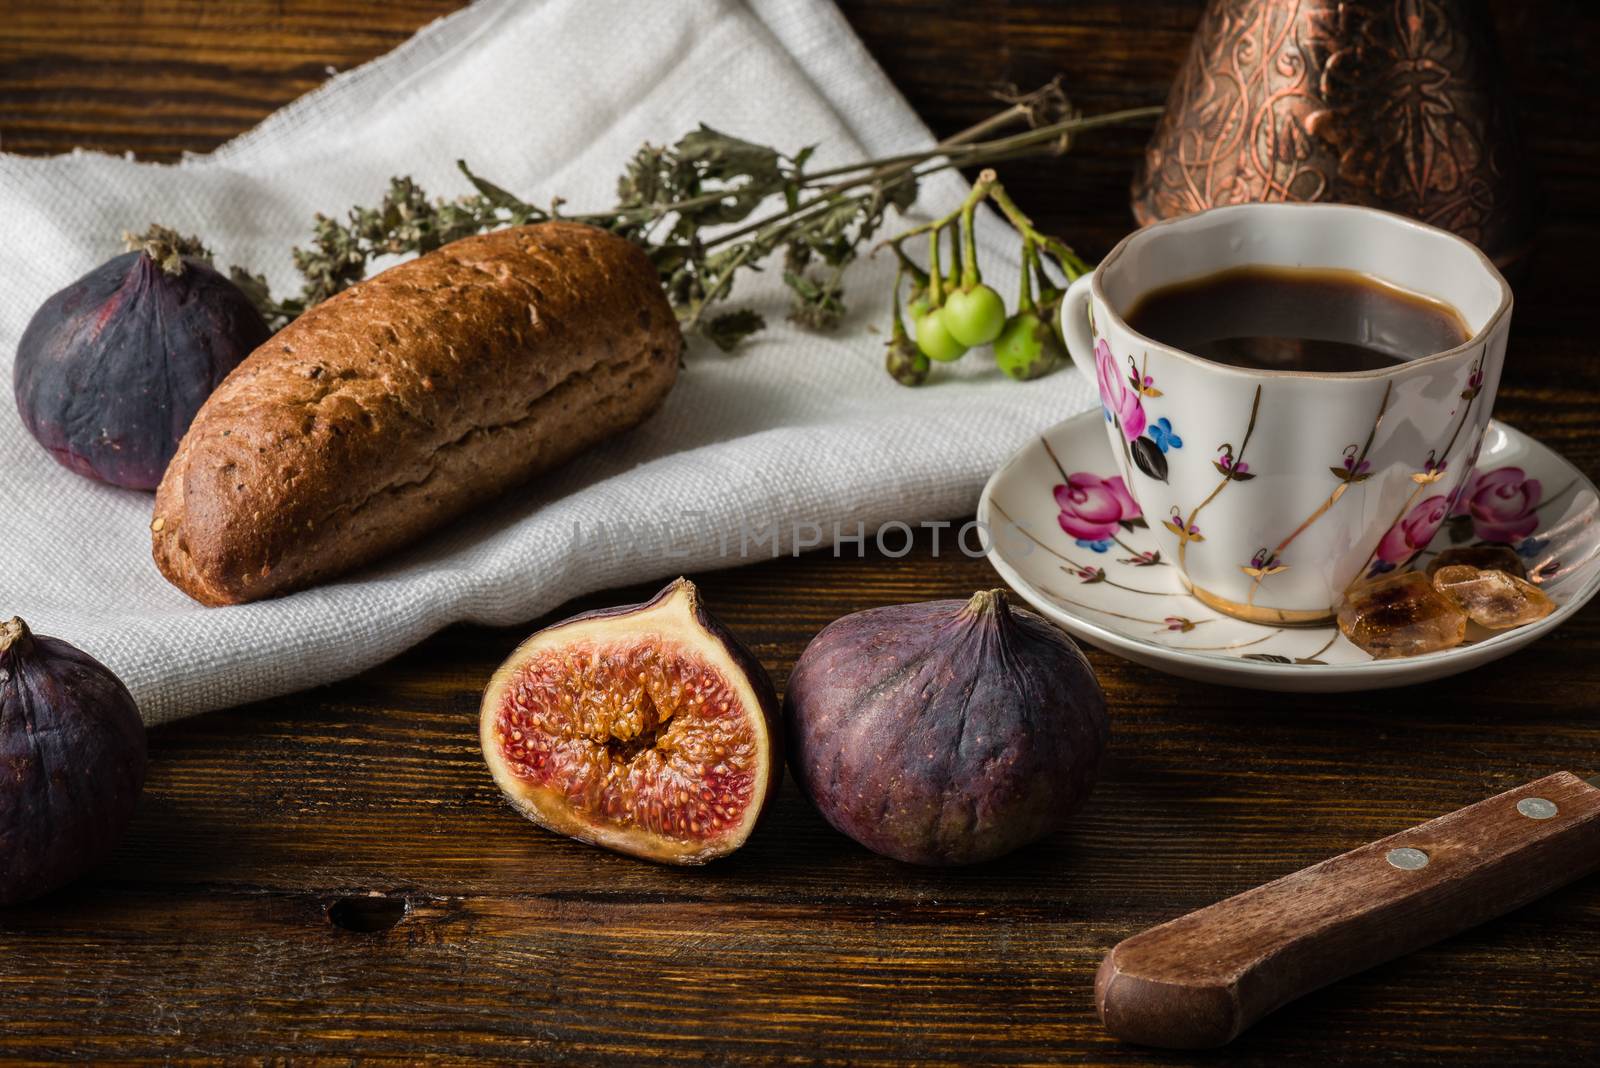 Light breakfast with coffee, bun and few figs. by Seva_blsv